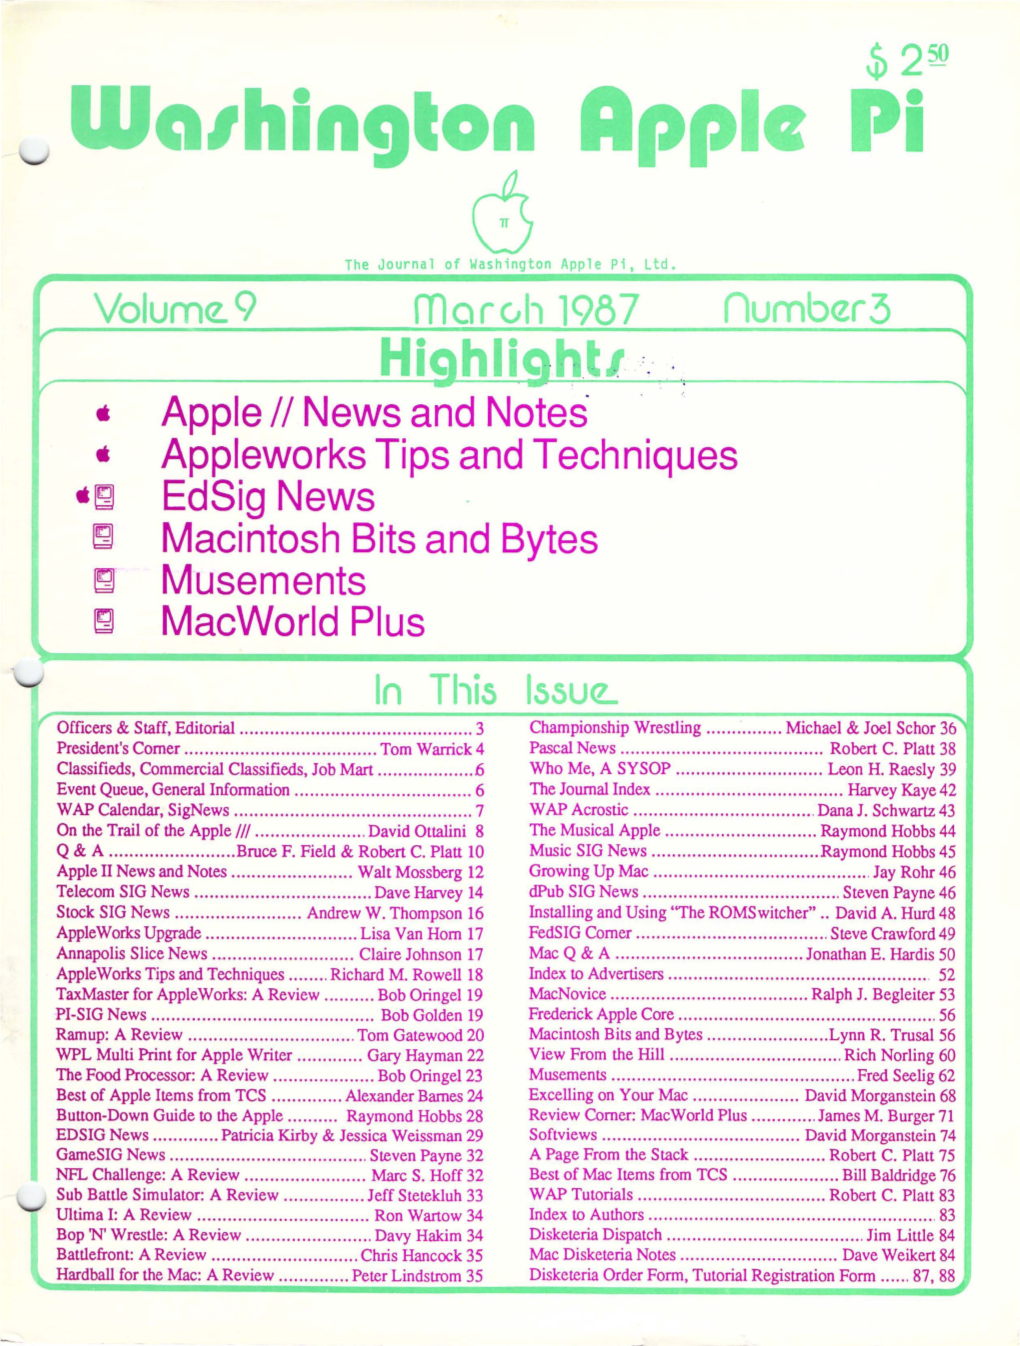 Washington Apple Pi Journal, March 1987